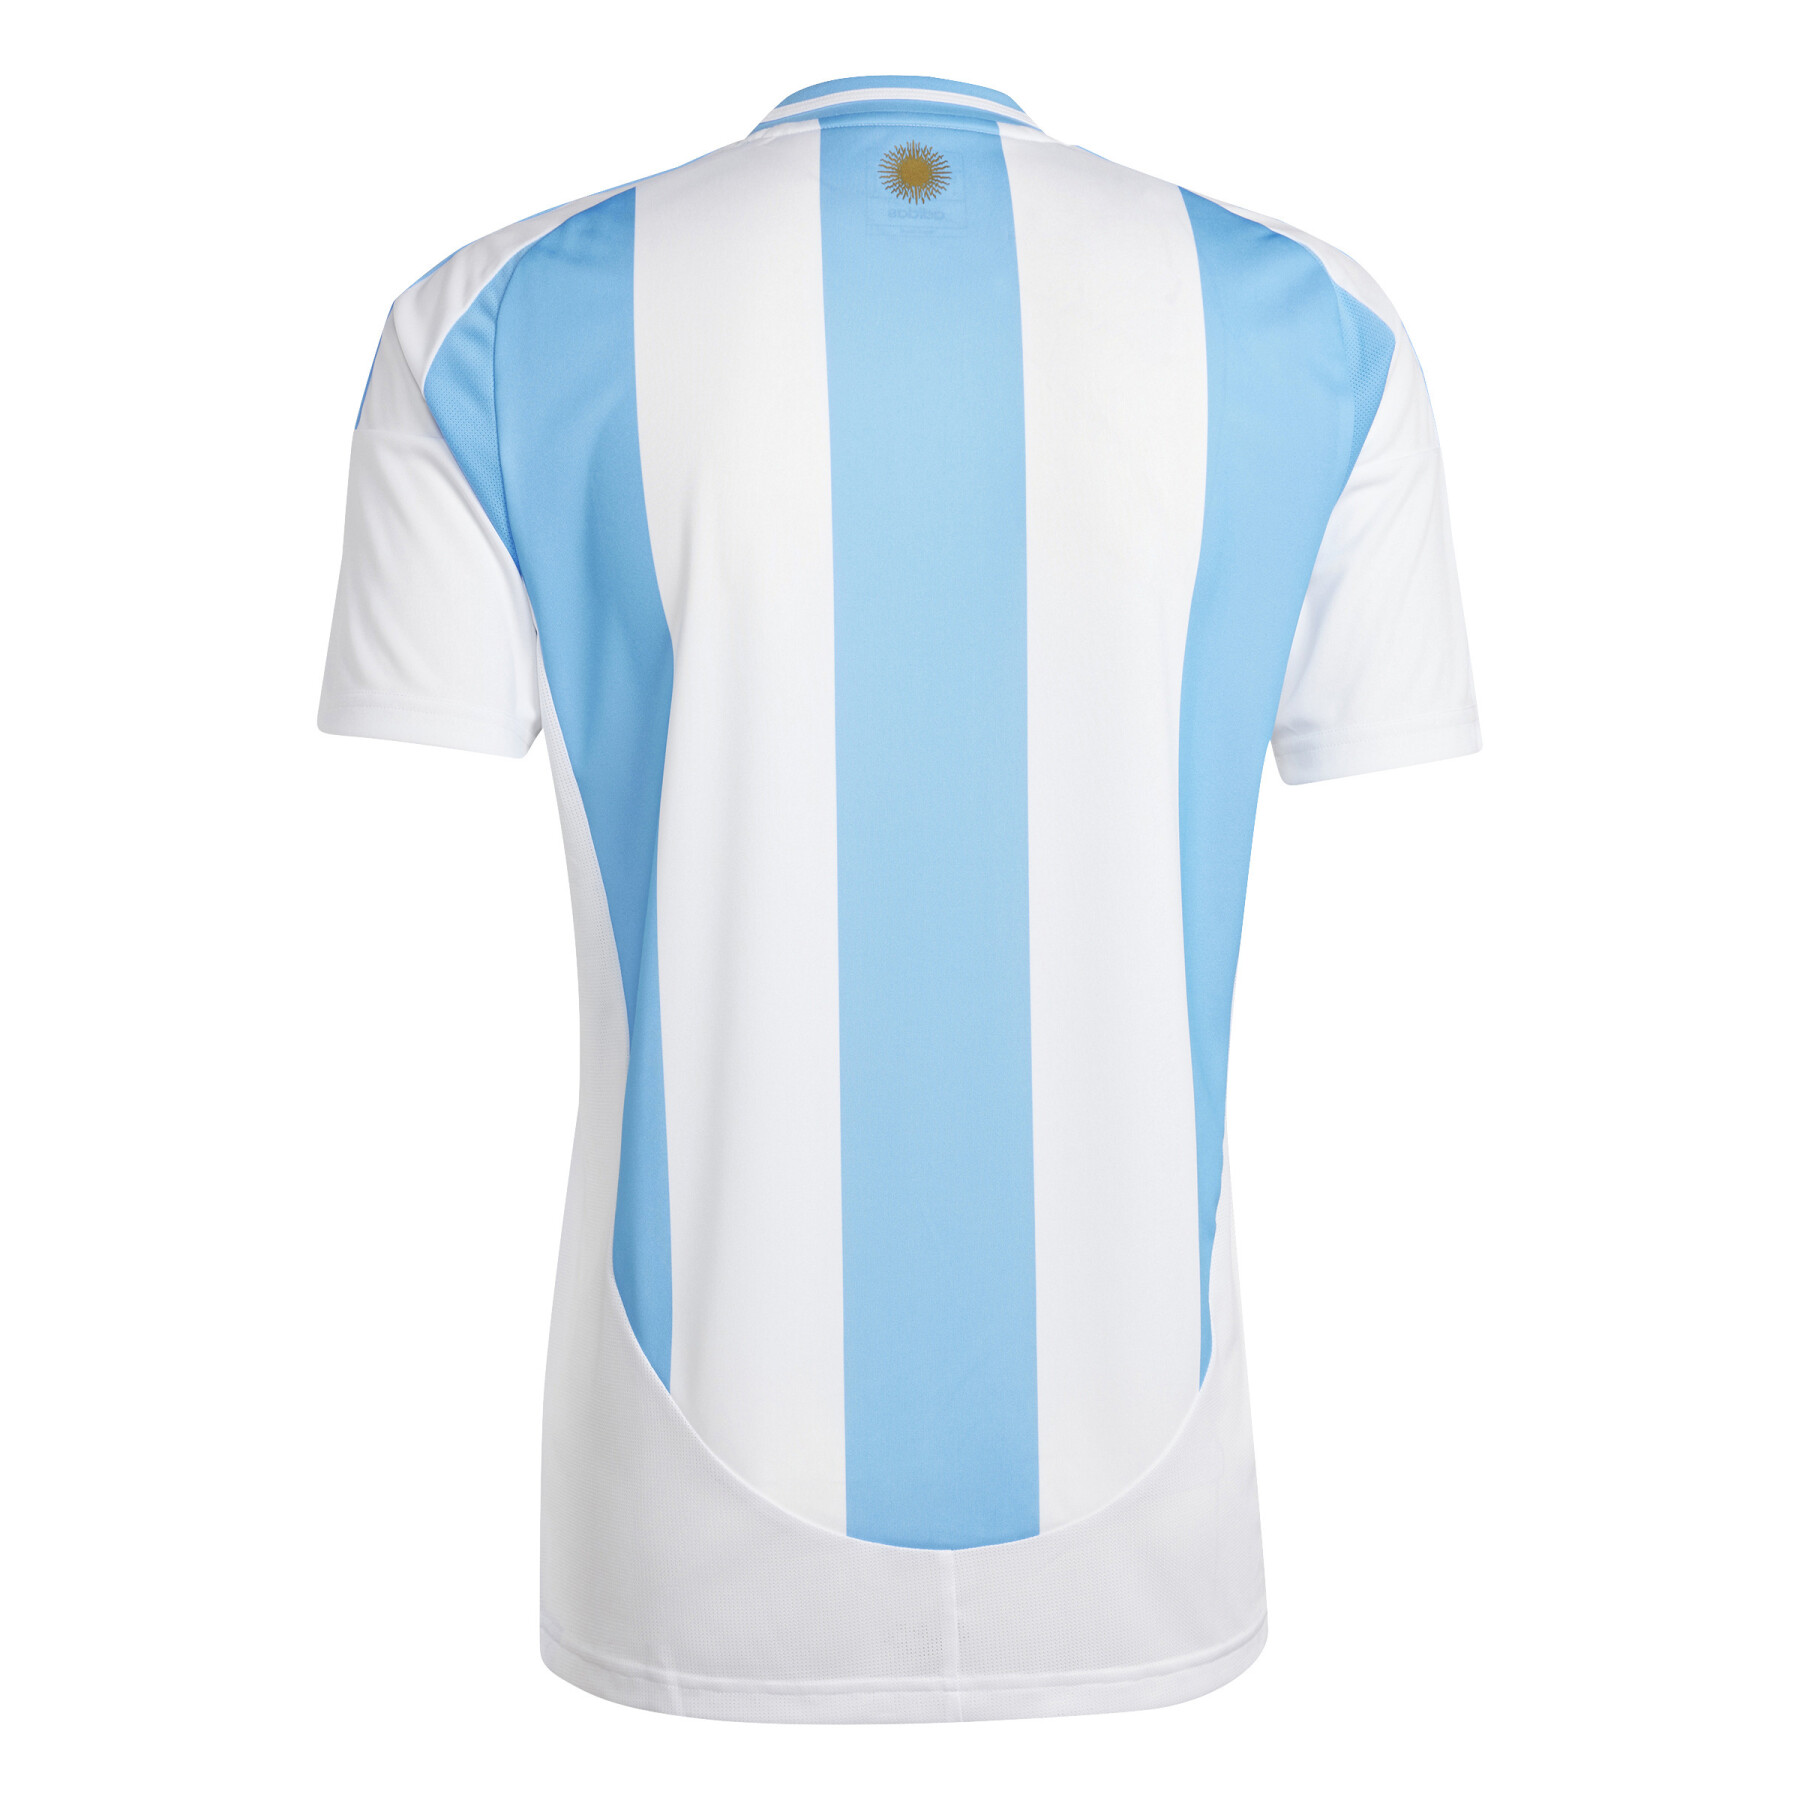 Home jersey Argentine Copa America 2024